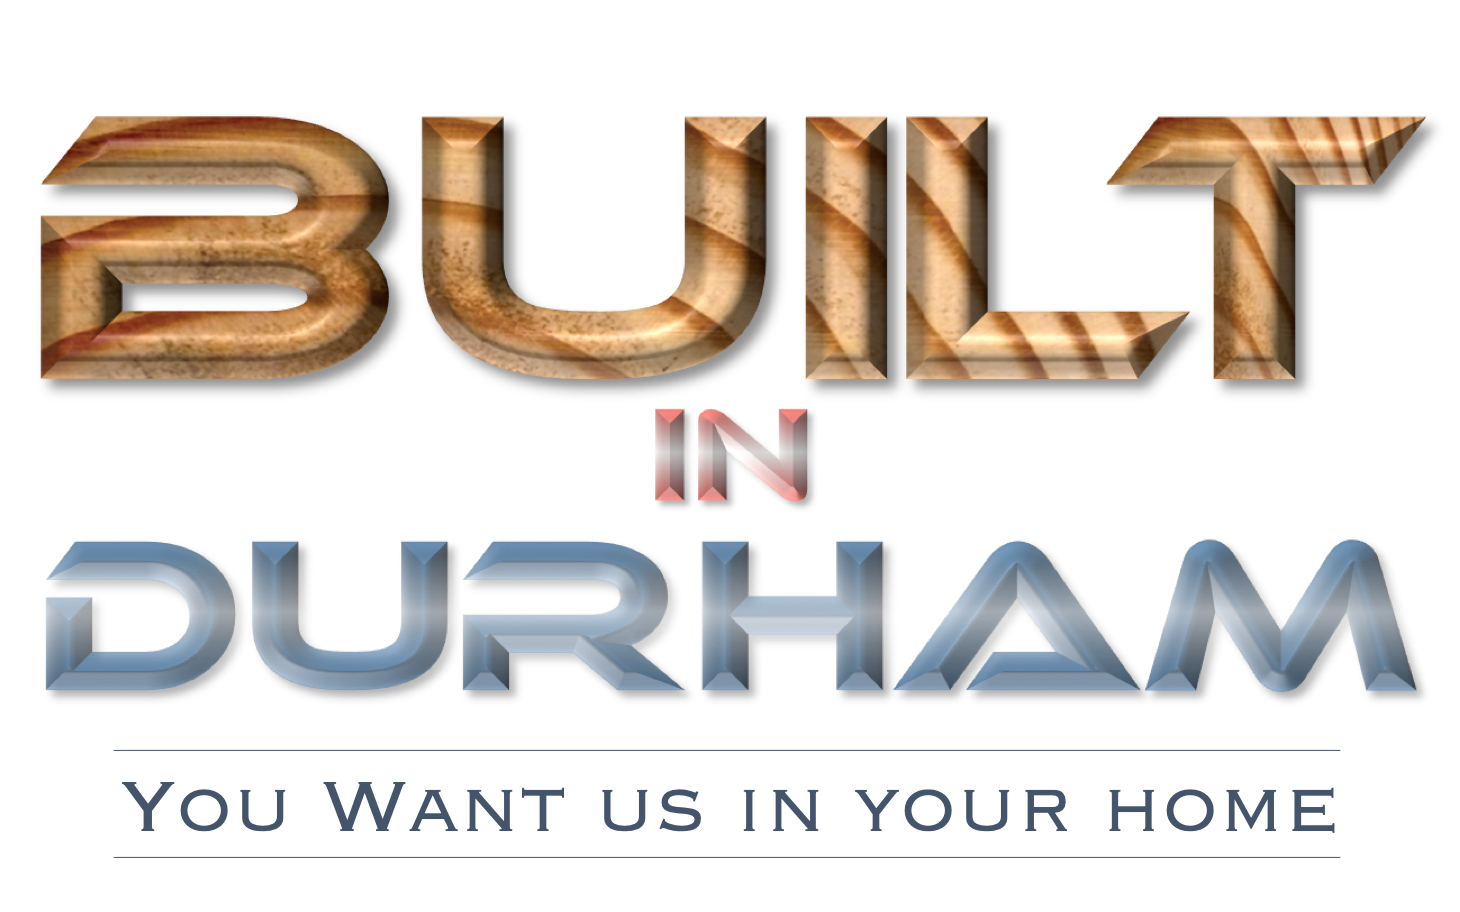 Built In Durham Logo 2019 Final